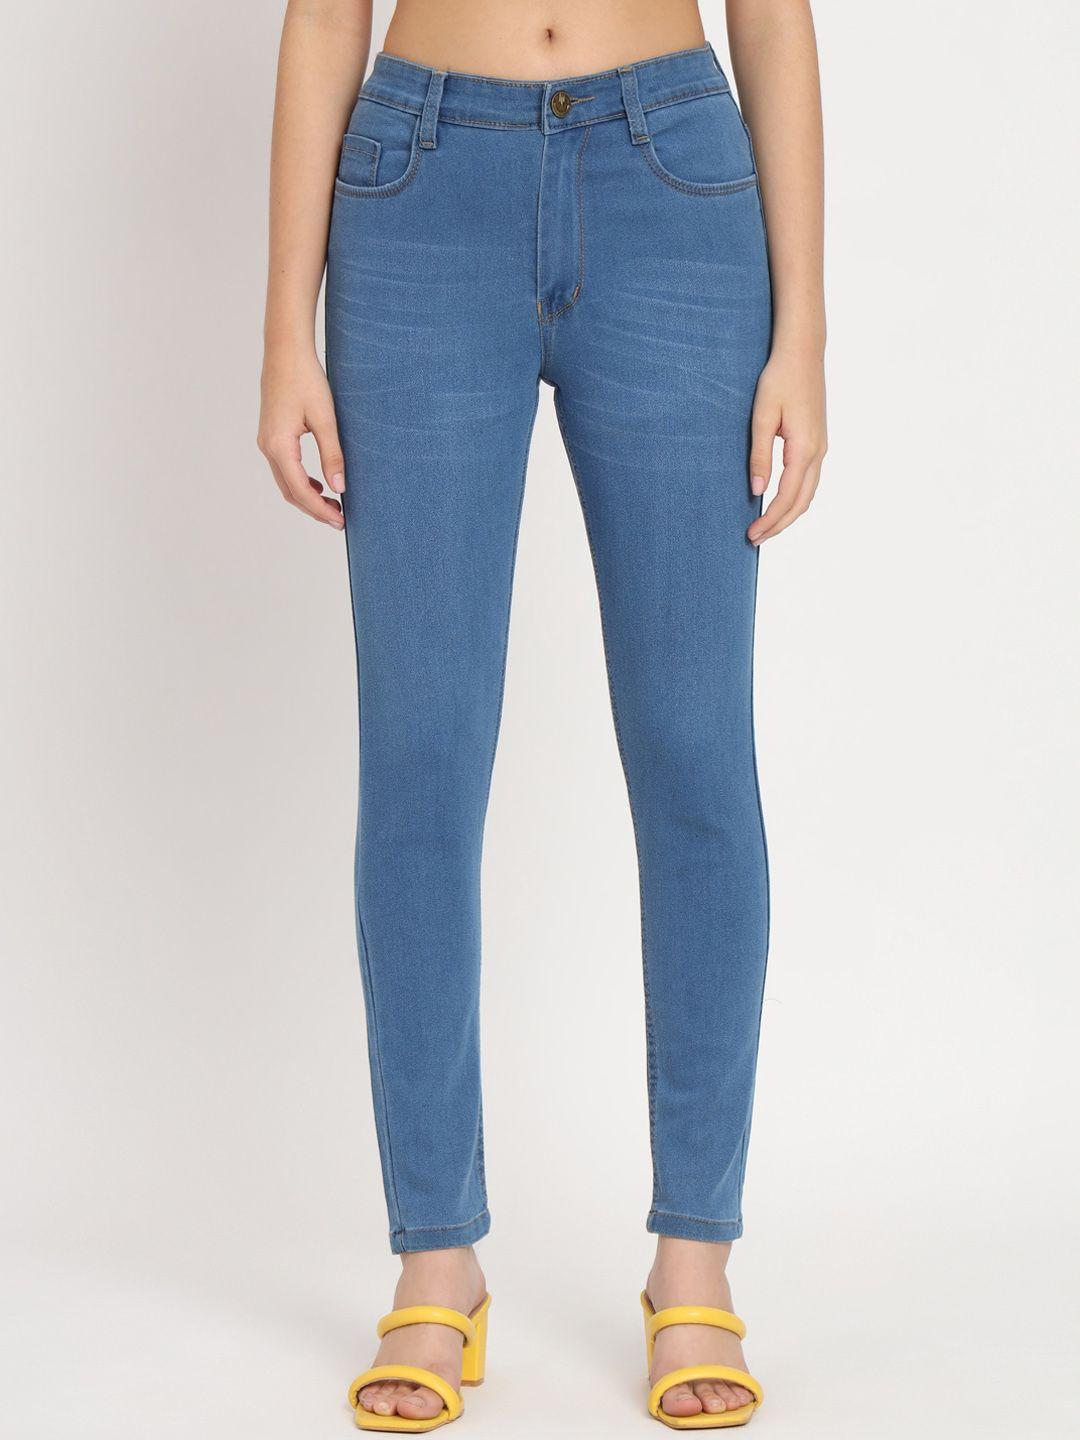 BAESD Women Jean Skinny Fit Mid-Rise Clean Look Jeans